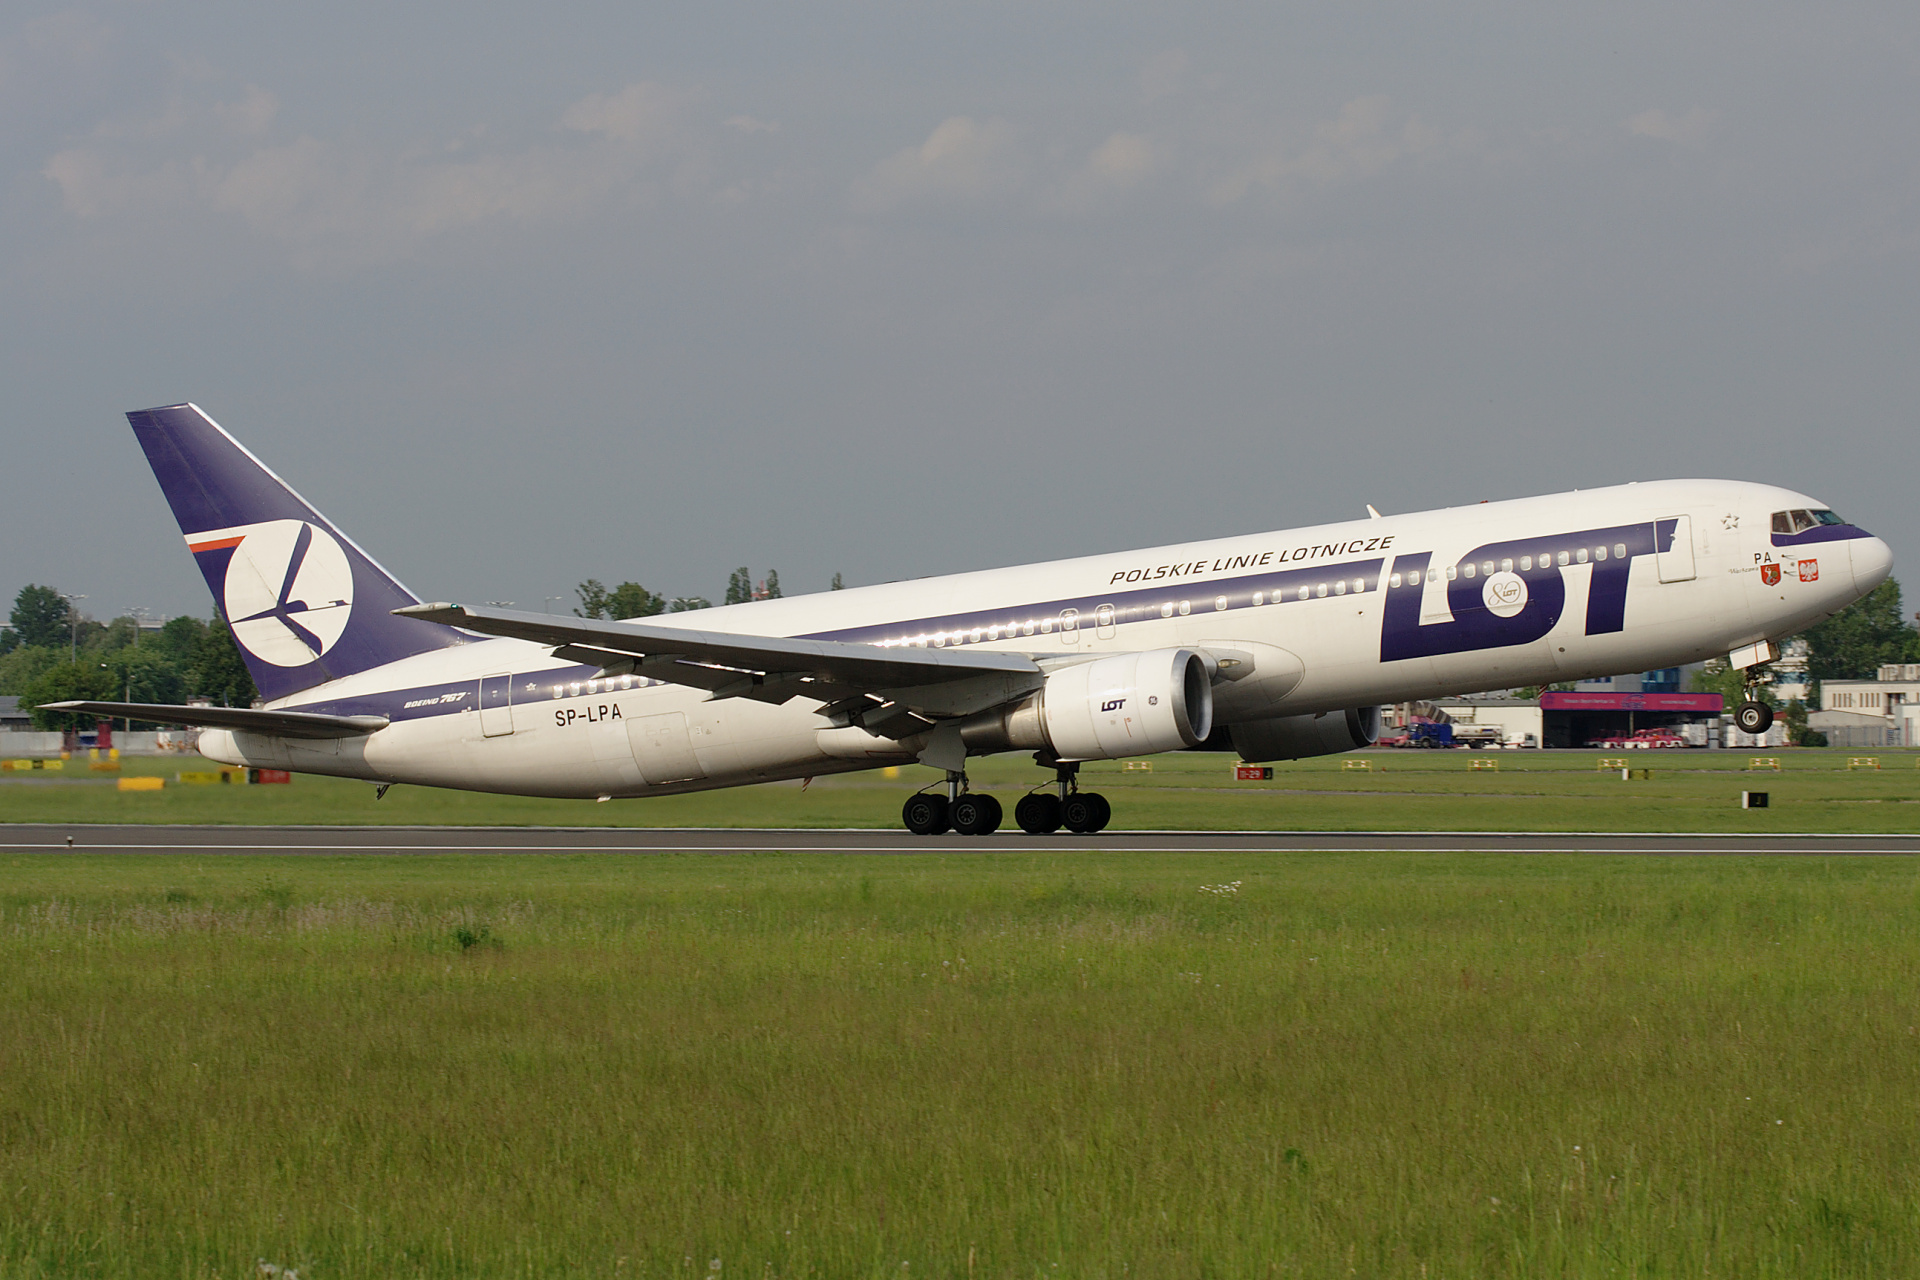 SP-LPA (80th Anniversary sticker) (Aircraft » EPWA Spotting » Boeing 767-300 » LOT Polish Airlines)